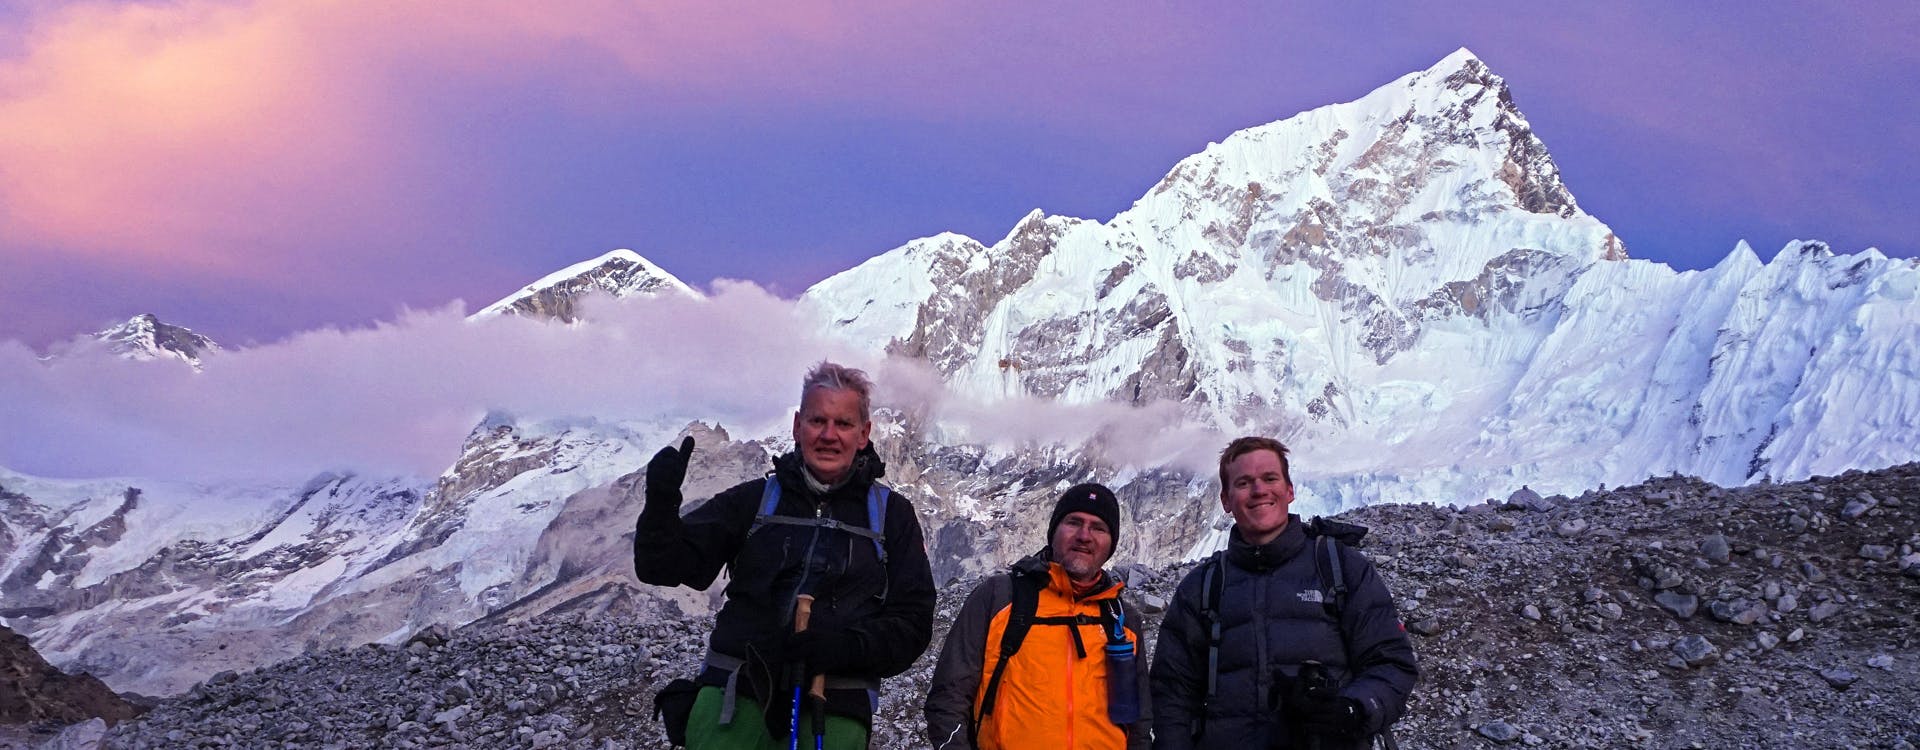 Everest Base Camp Trek with Mani Rimdu Festival